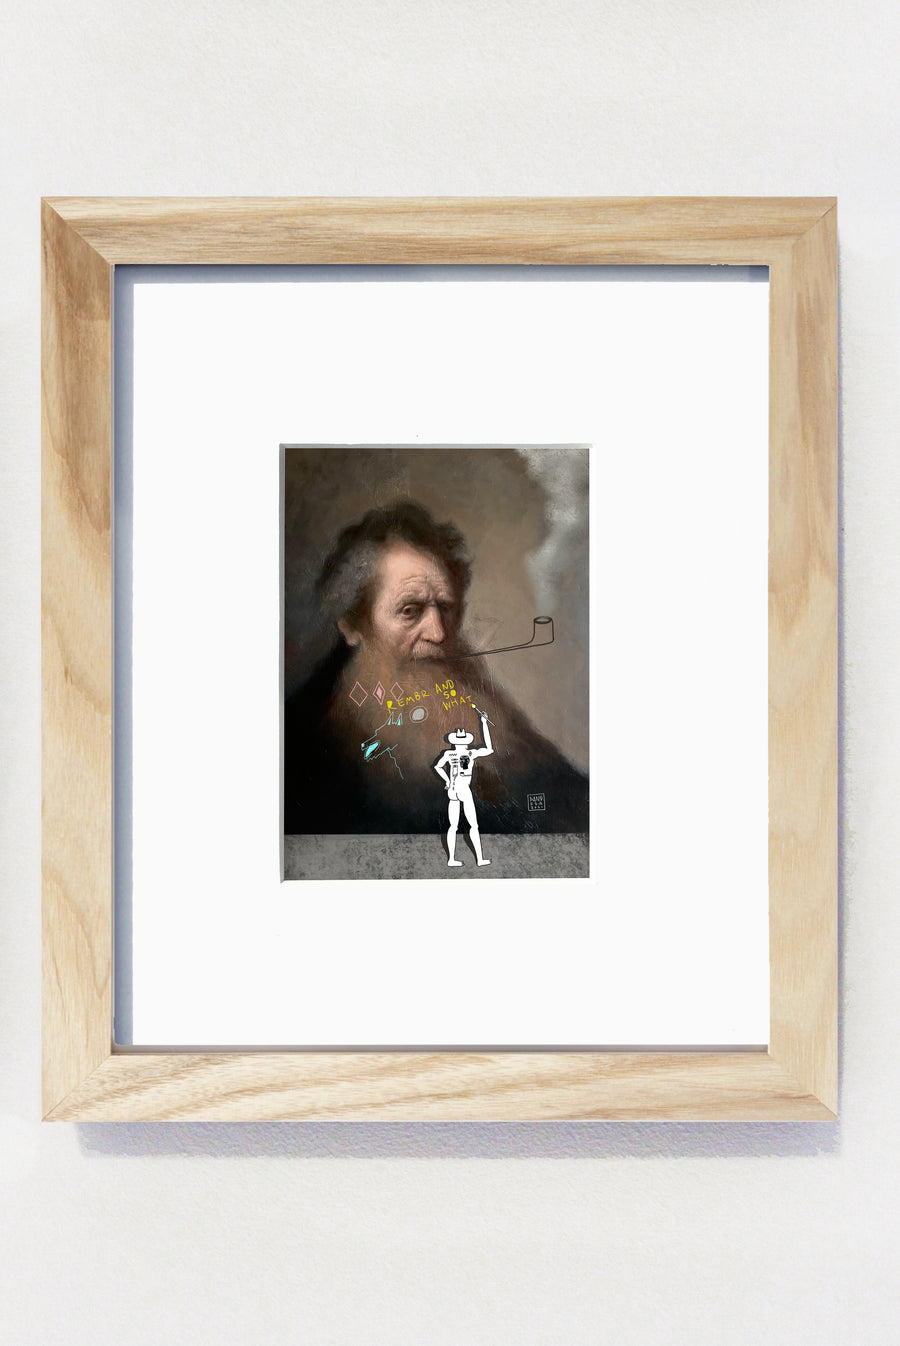 Fipsi Seilern - PANG - Rembrandt / Miniature Asshole